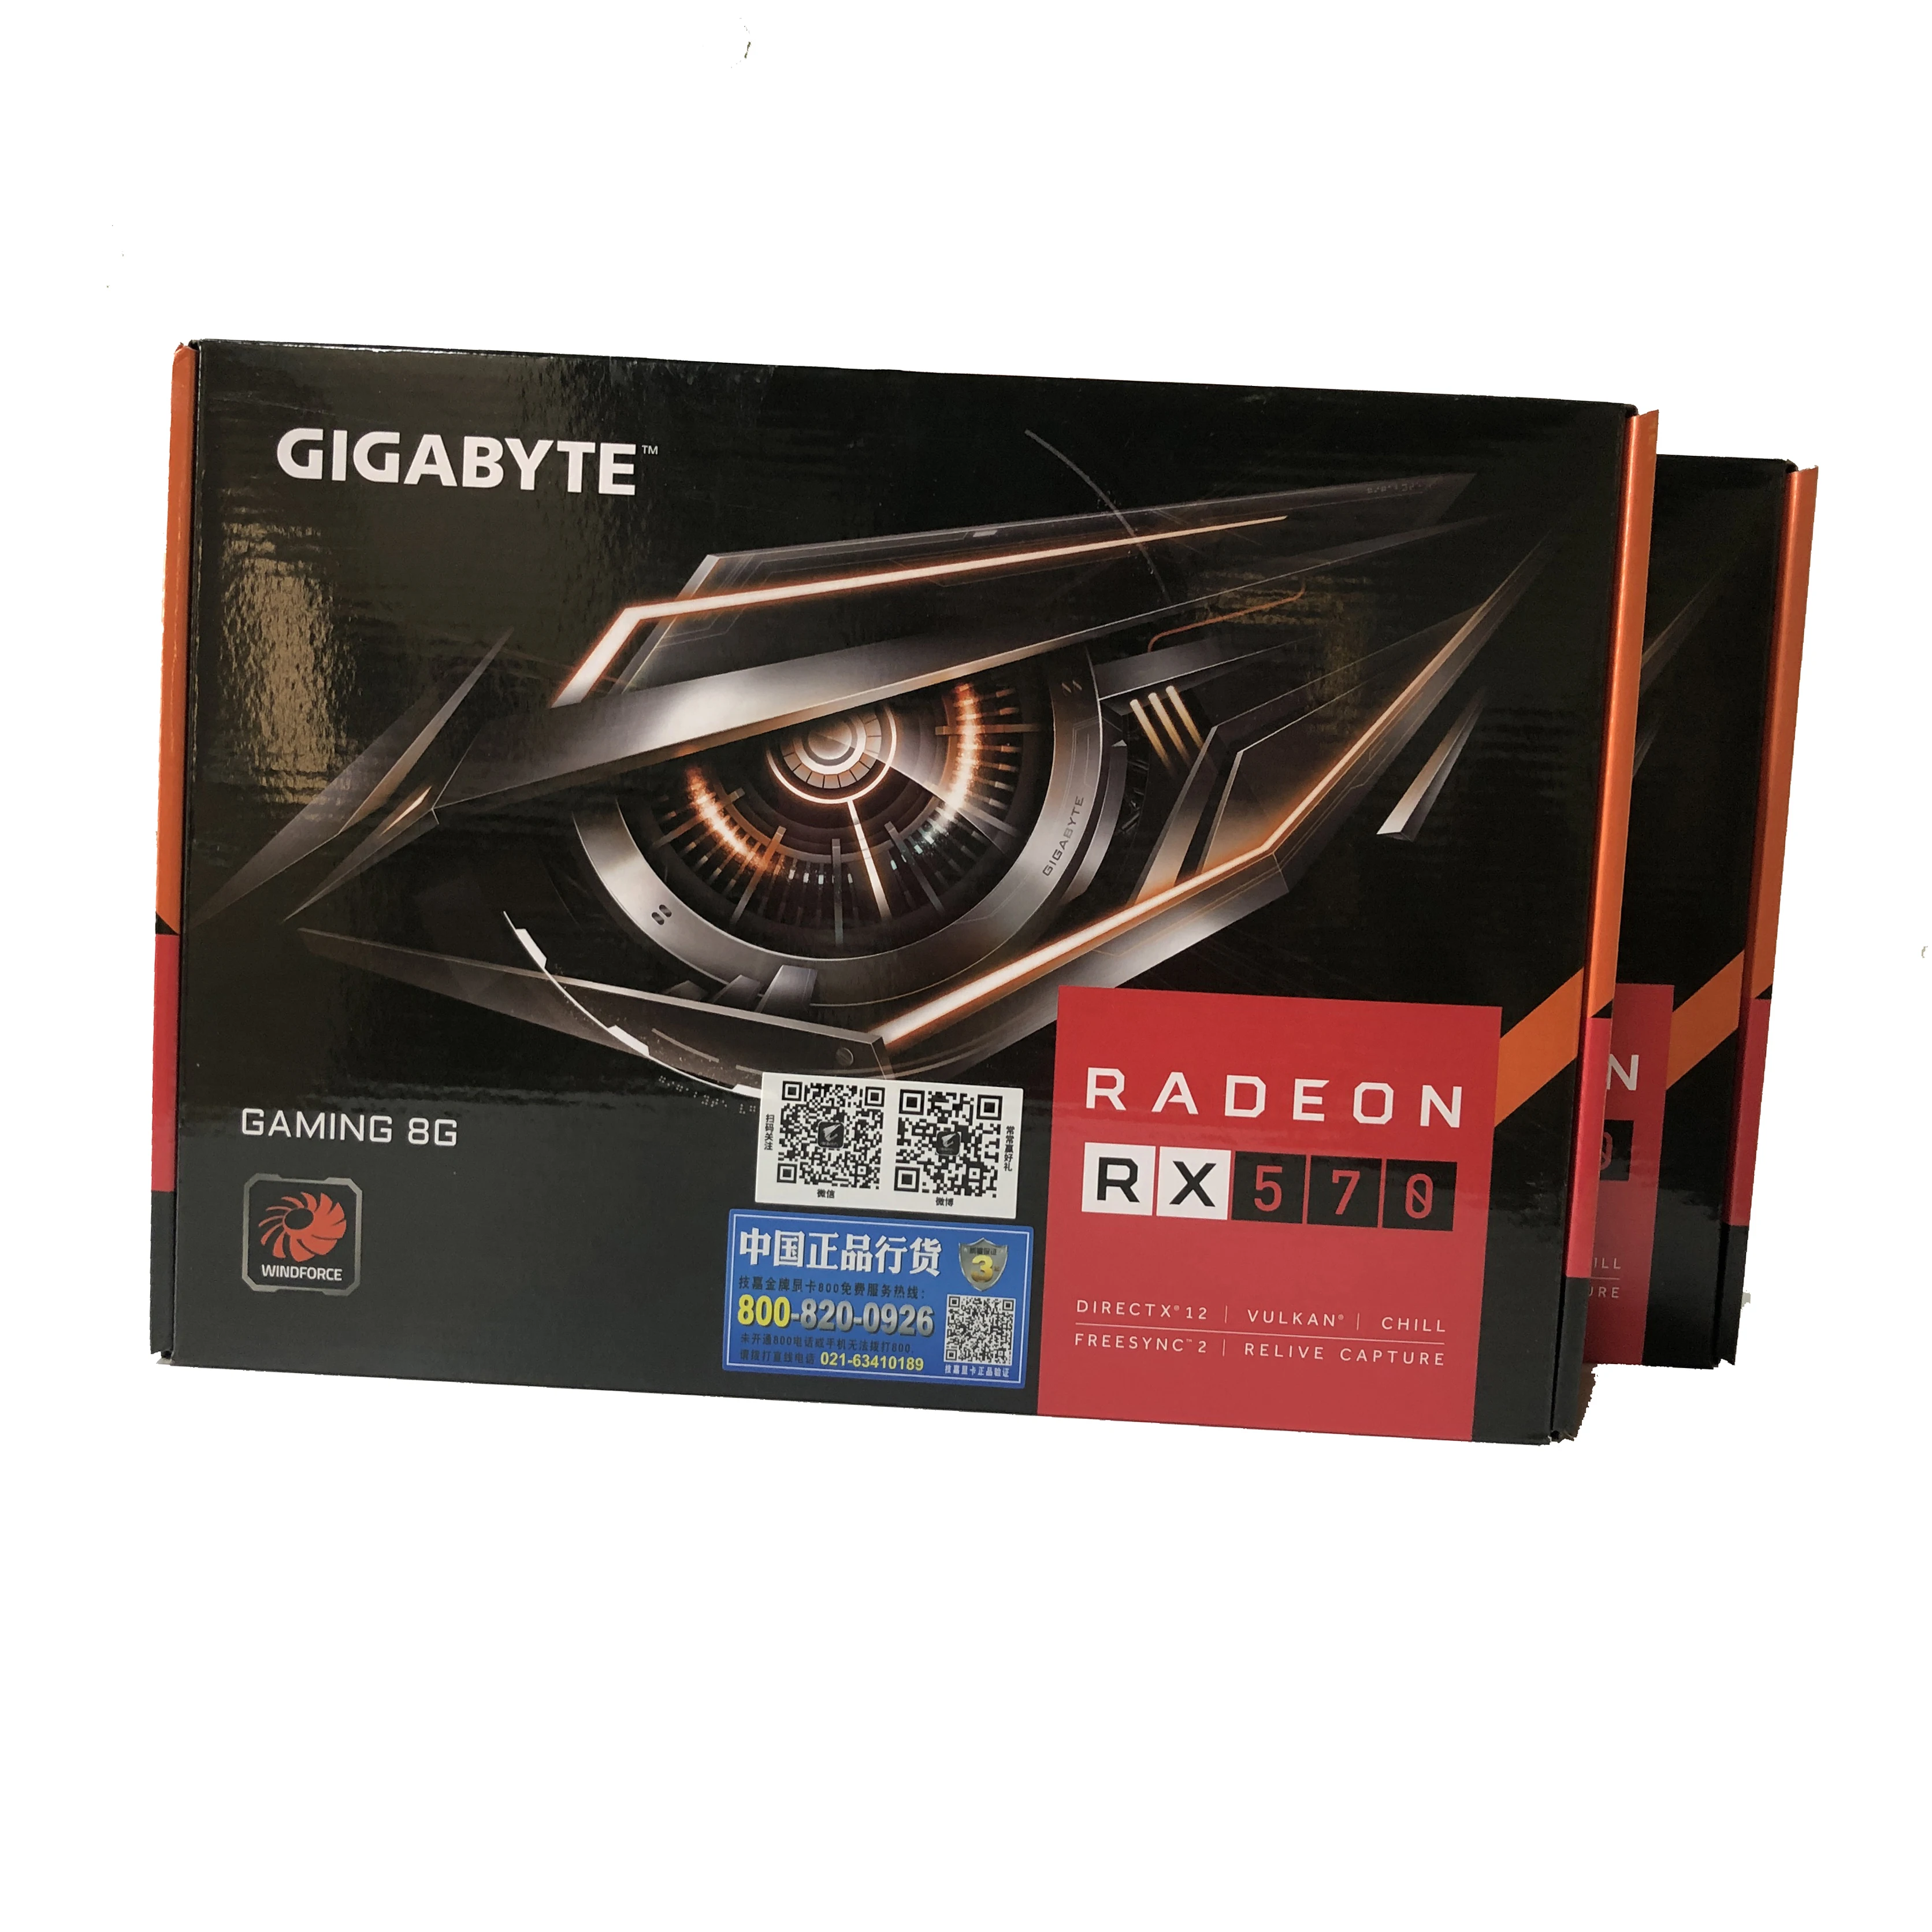 Gigabyte AMD RX 570 8gb. Gigabyte AMD Radeon RX 570 Gaming 4gb. Don't Touch 8gb RX 570. Turbina RX 570 8gb dont Touch. Gigabyte rx 570 gaming